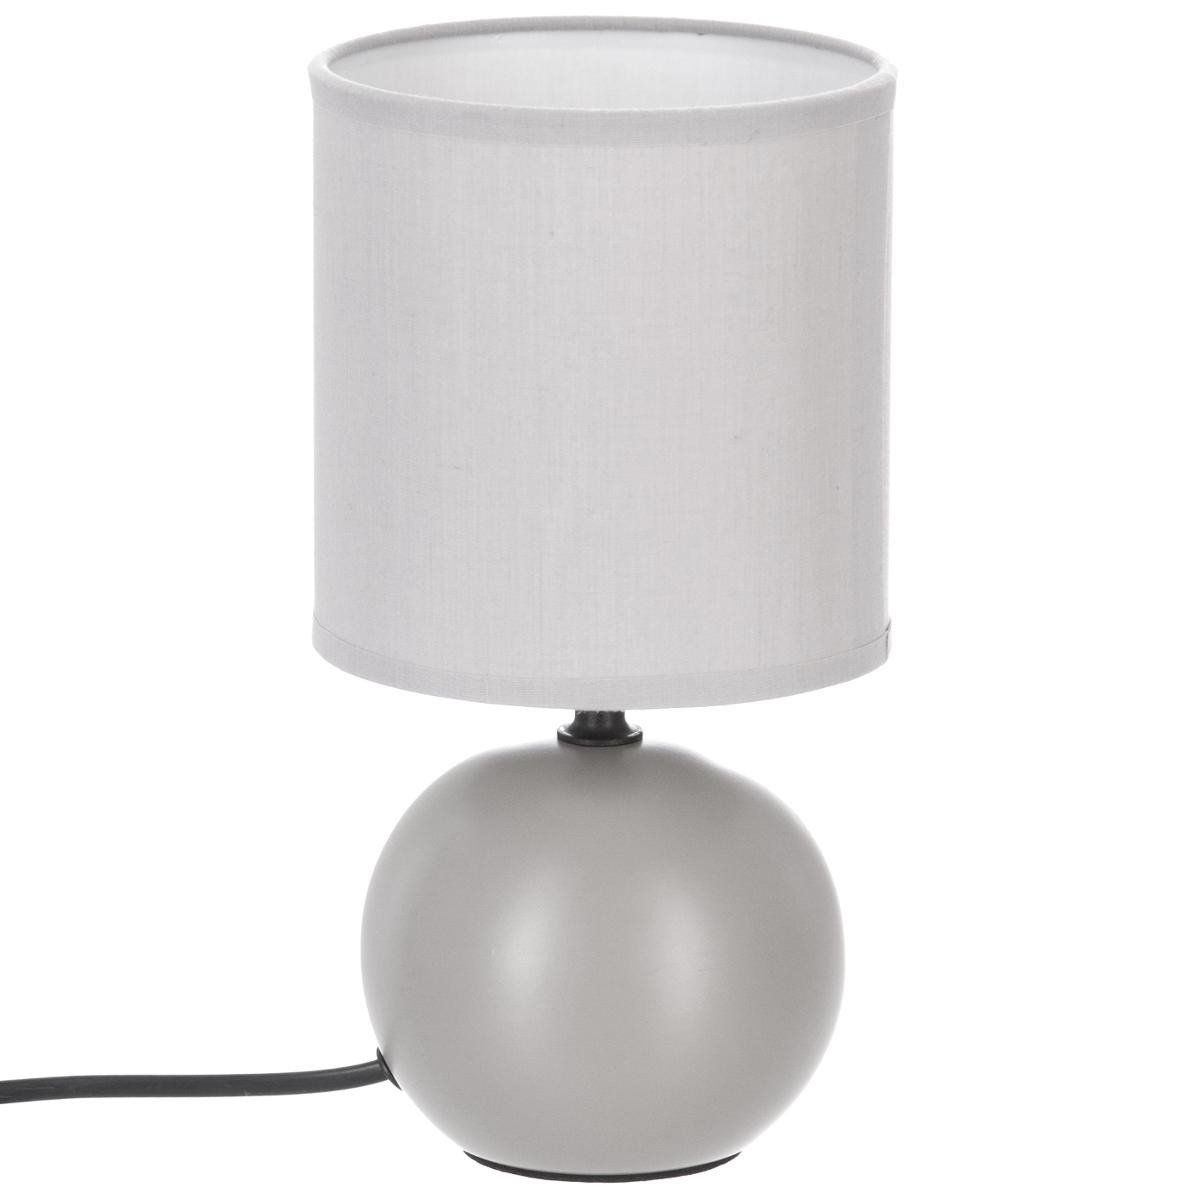 Atmosphera Keramická stolní lampa BOULE GRIS, 25 cm, barva šedá - EMAKO.CZ s.r.o.